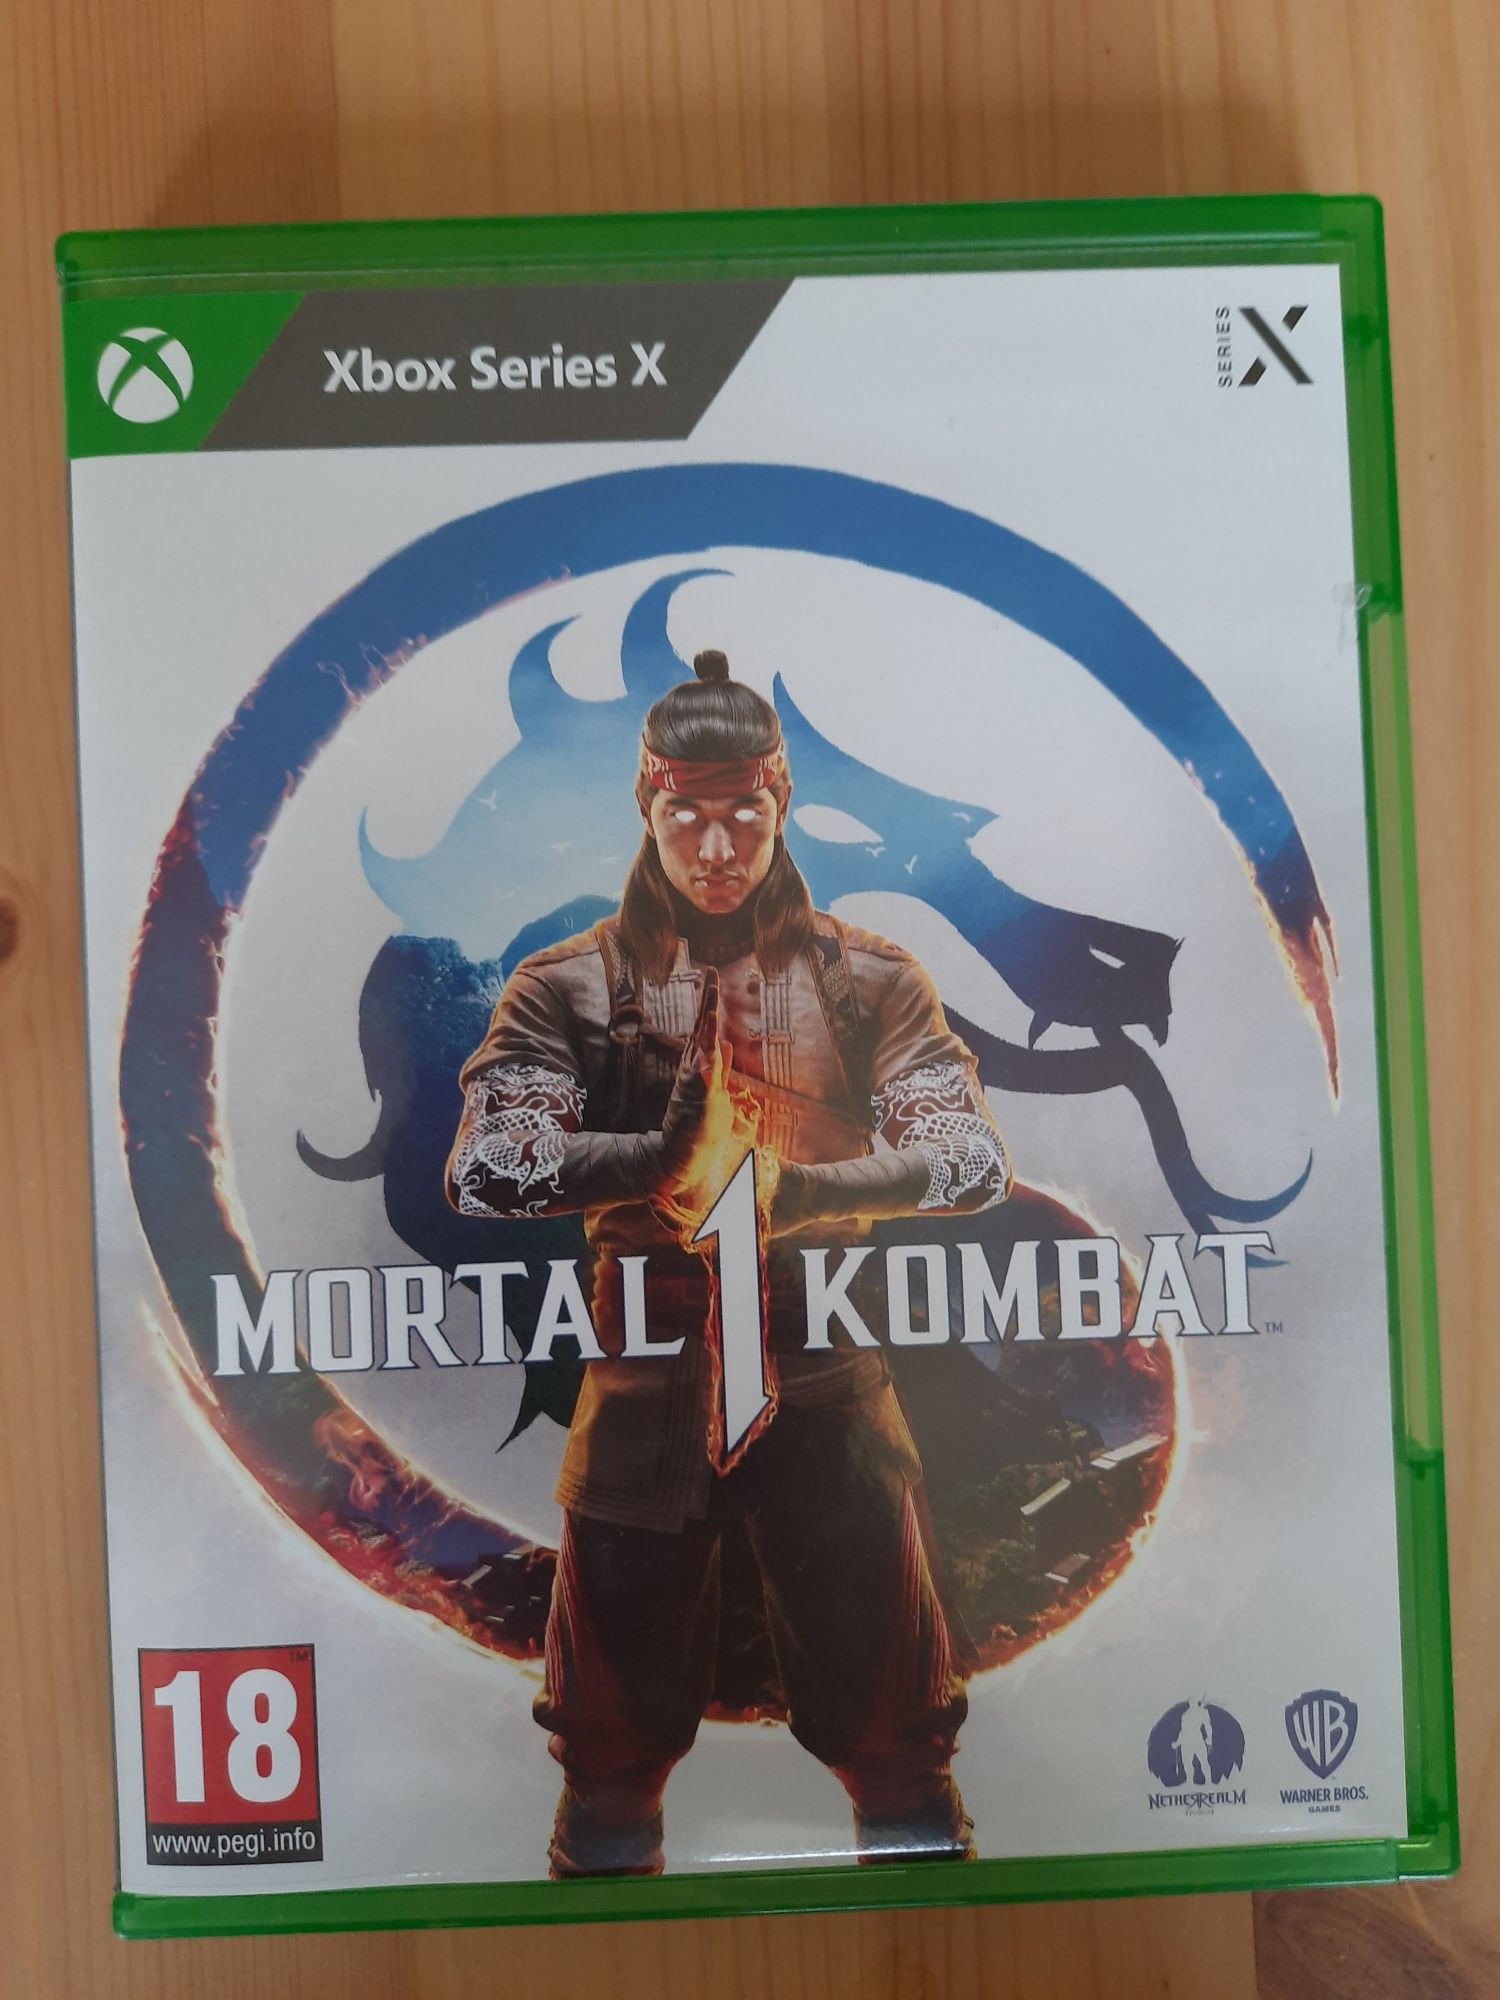 Mortal kombat Xbox series x